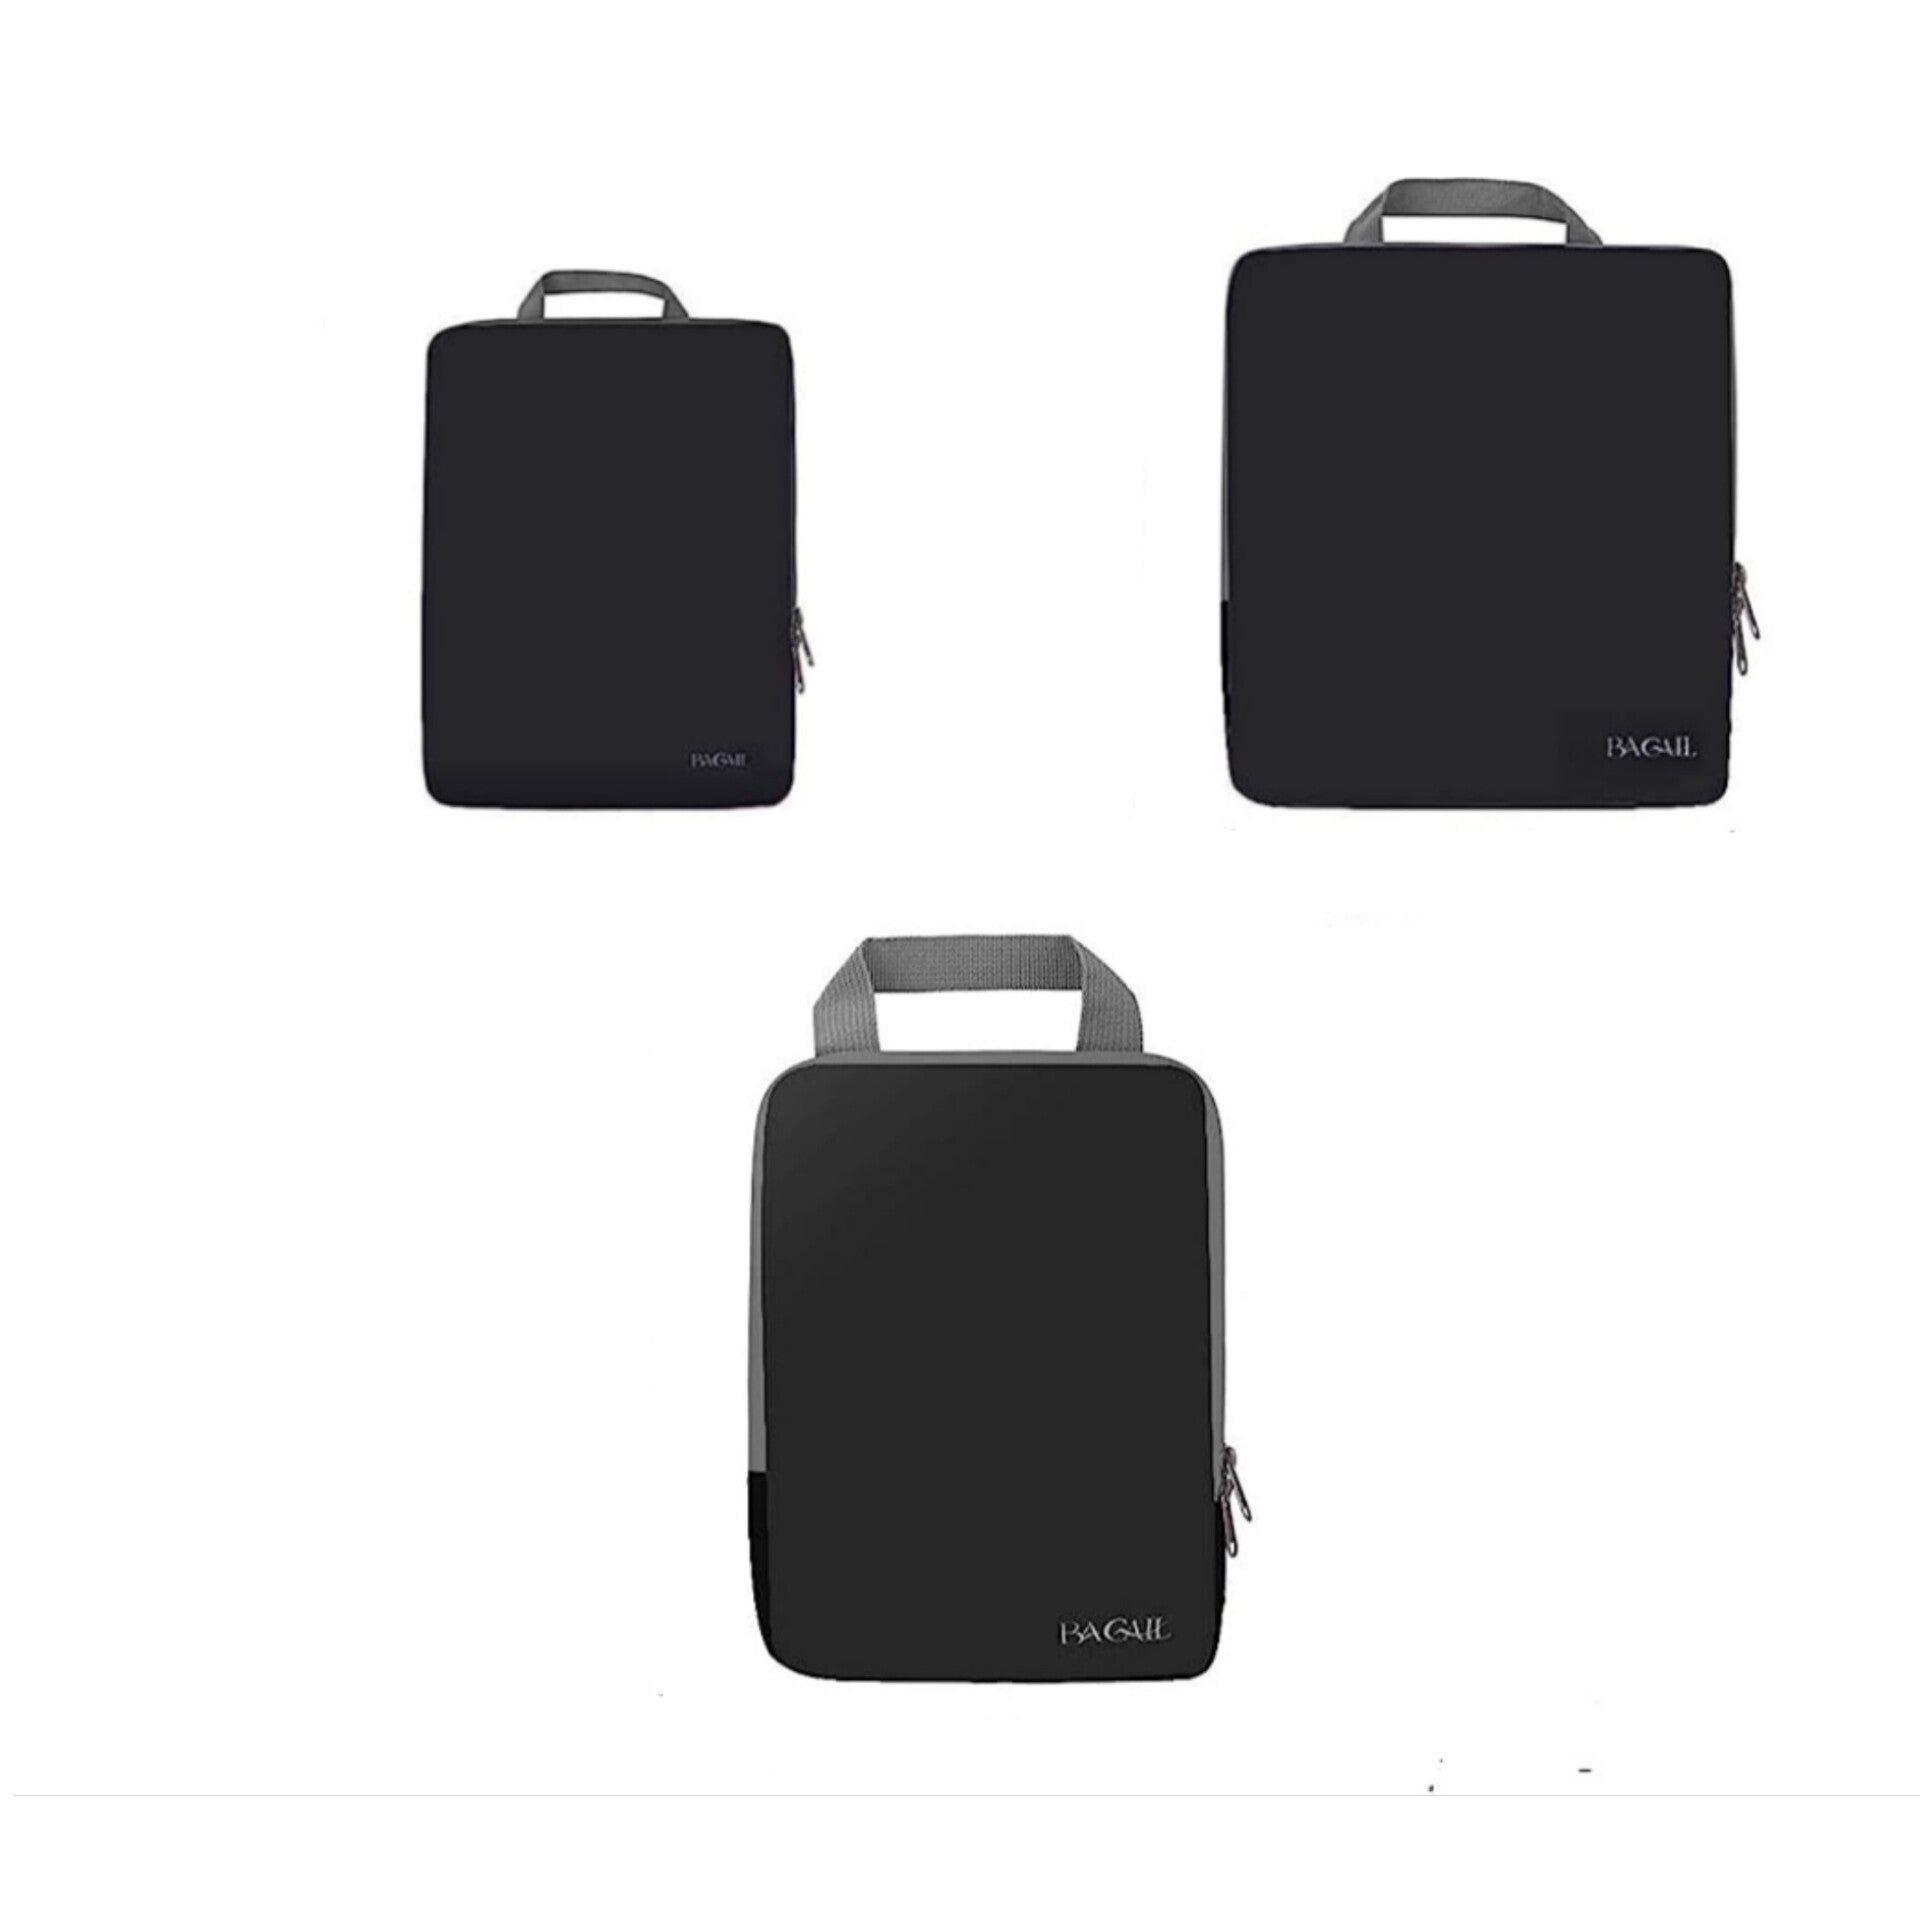 BAGAIL - Organizadores de equipaje de compresión expandibles para accesorios de viaje